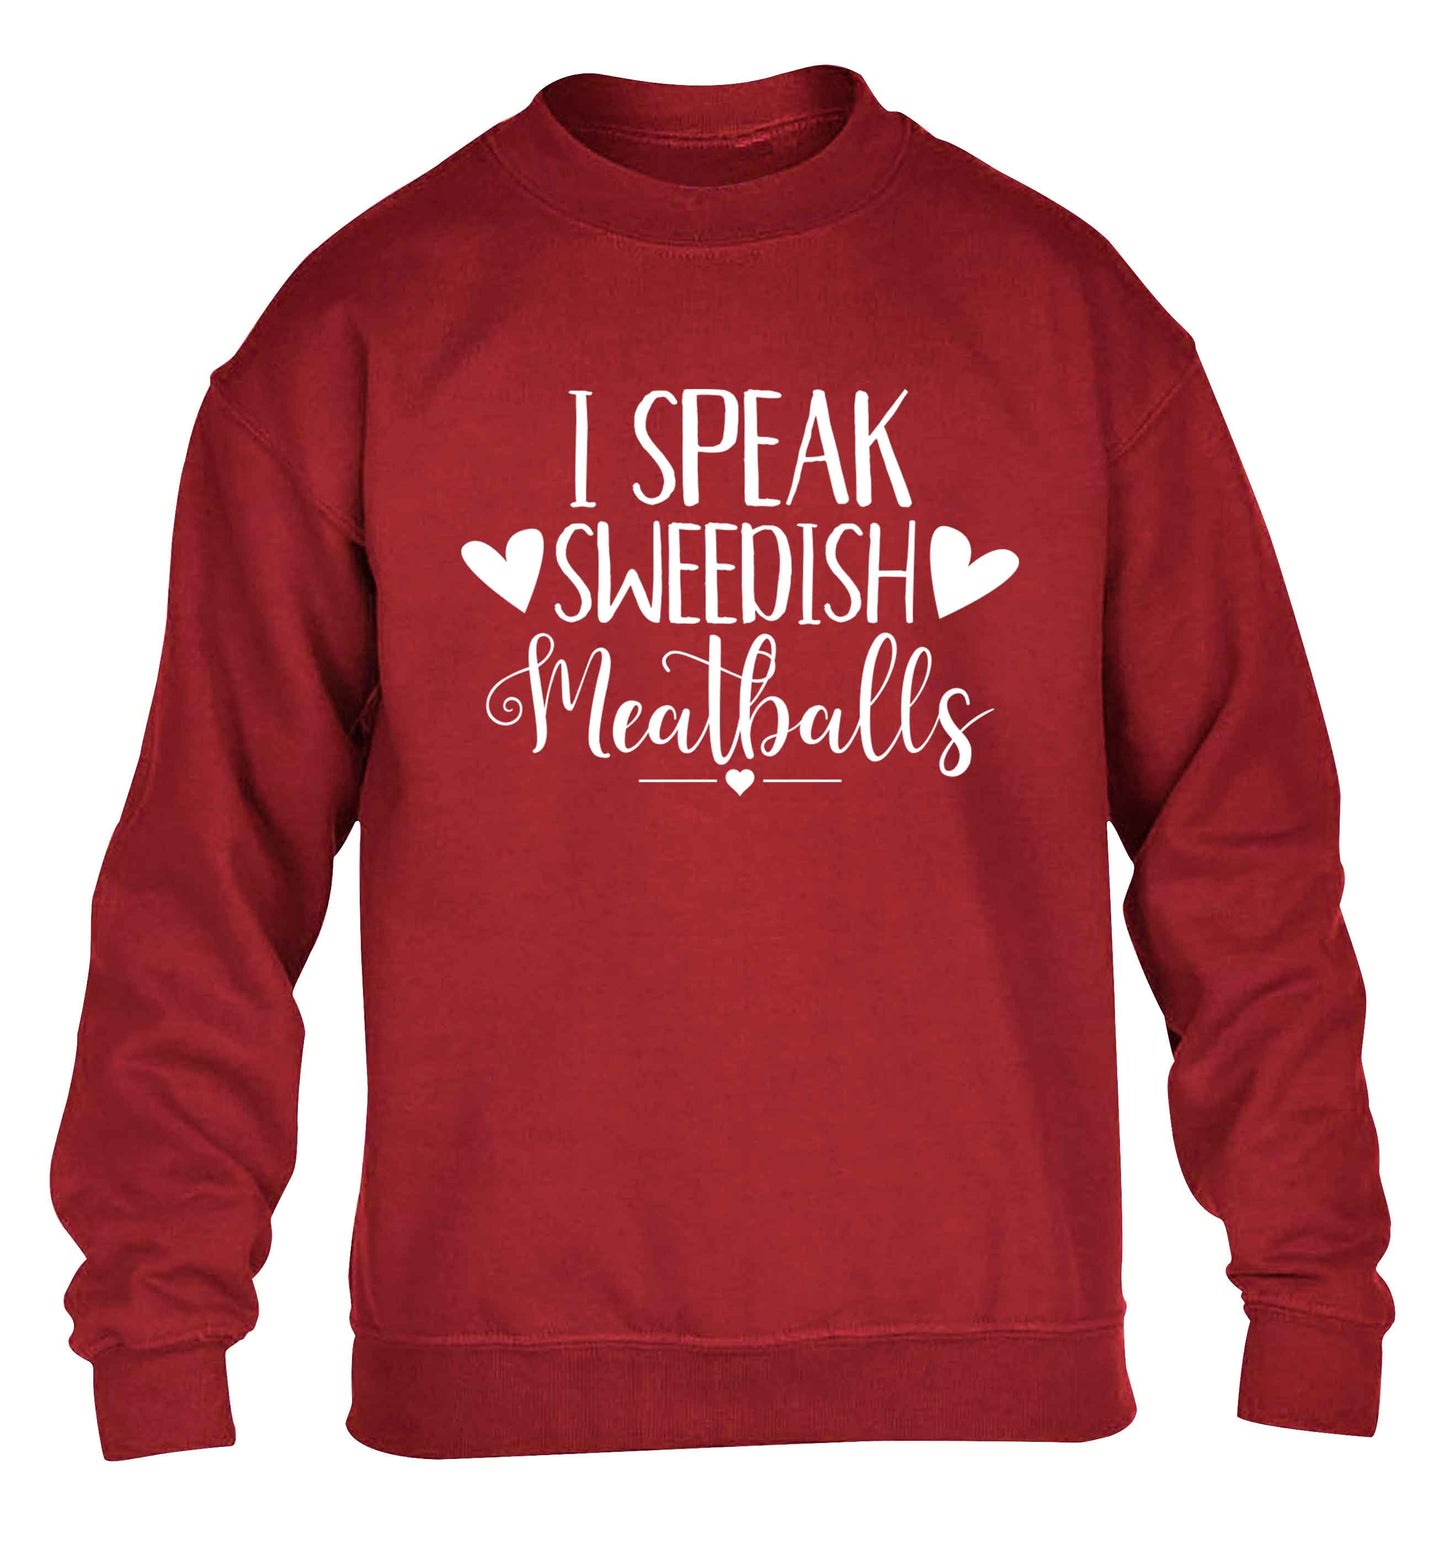 I speak sweedish...meatballs children's grey sweater 12-13 Years